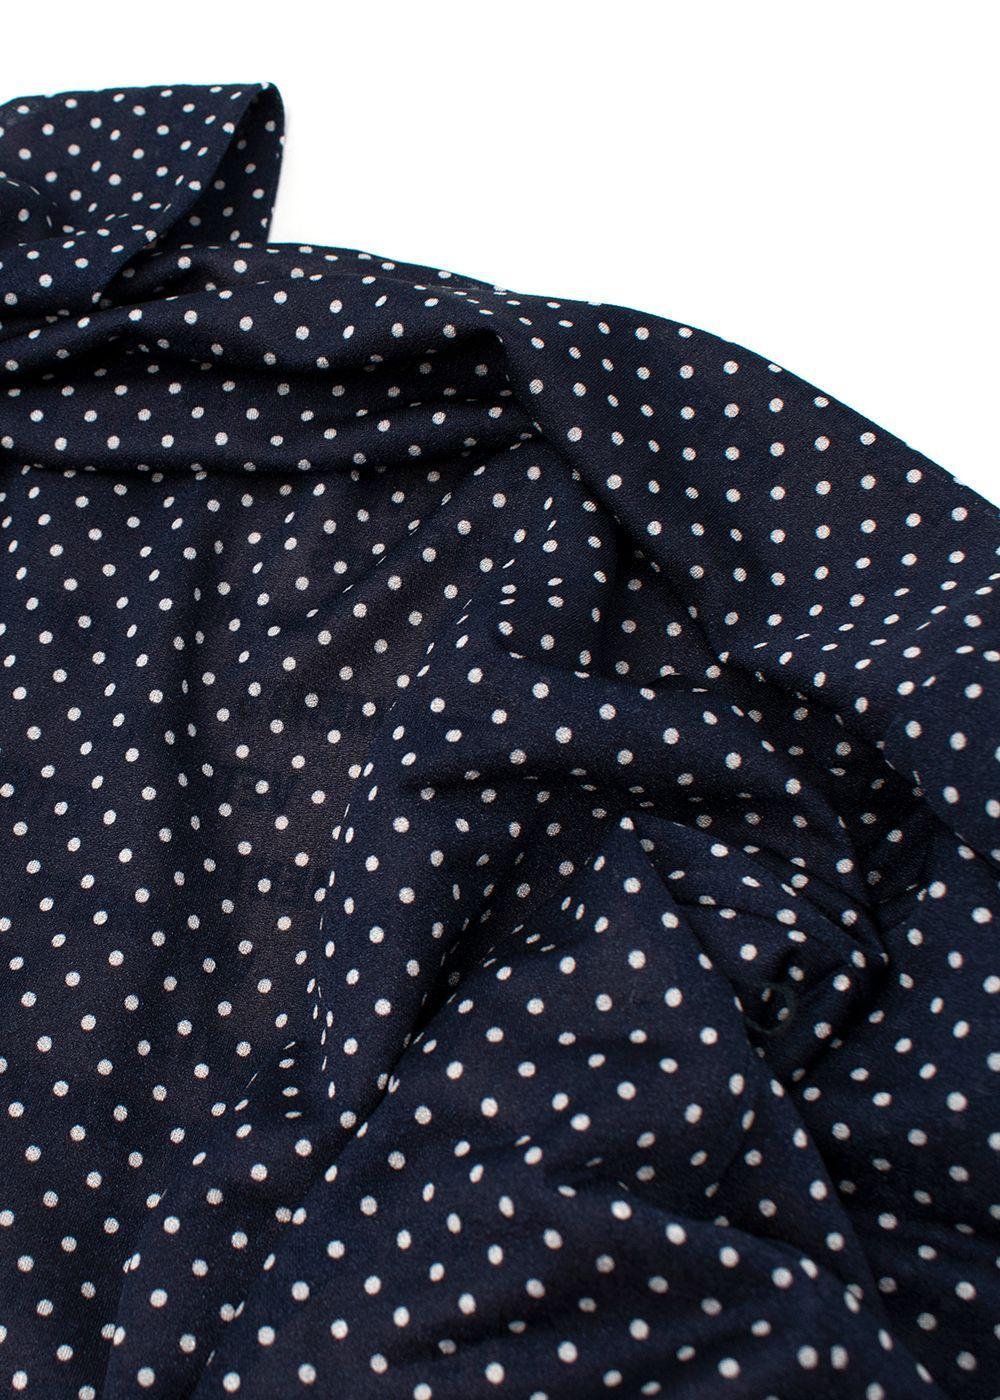 Vetements Navy Polka Dot Multi Fabric Wrap Dress - US 8 For Sale 2